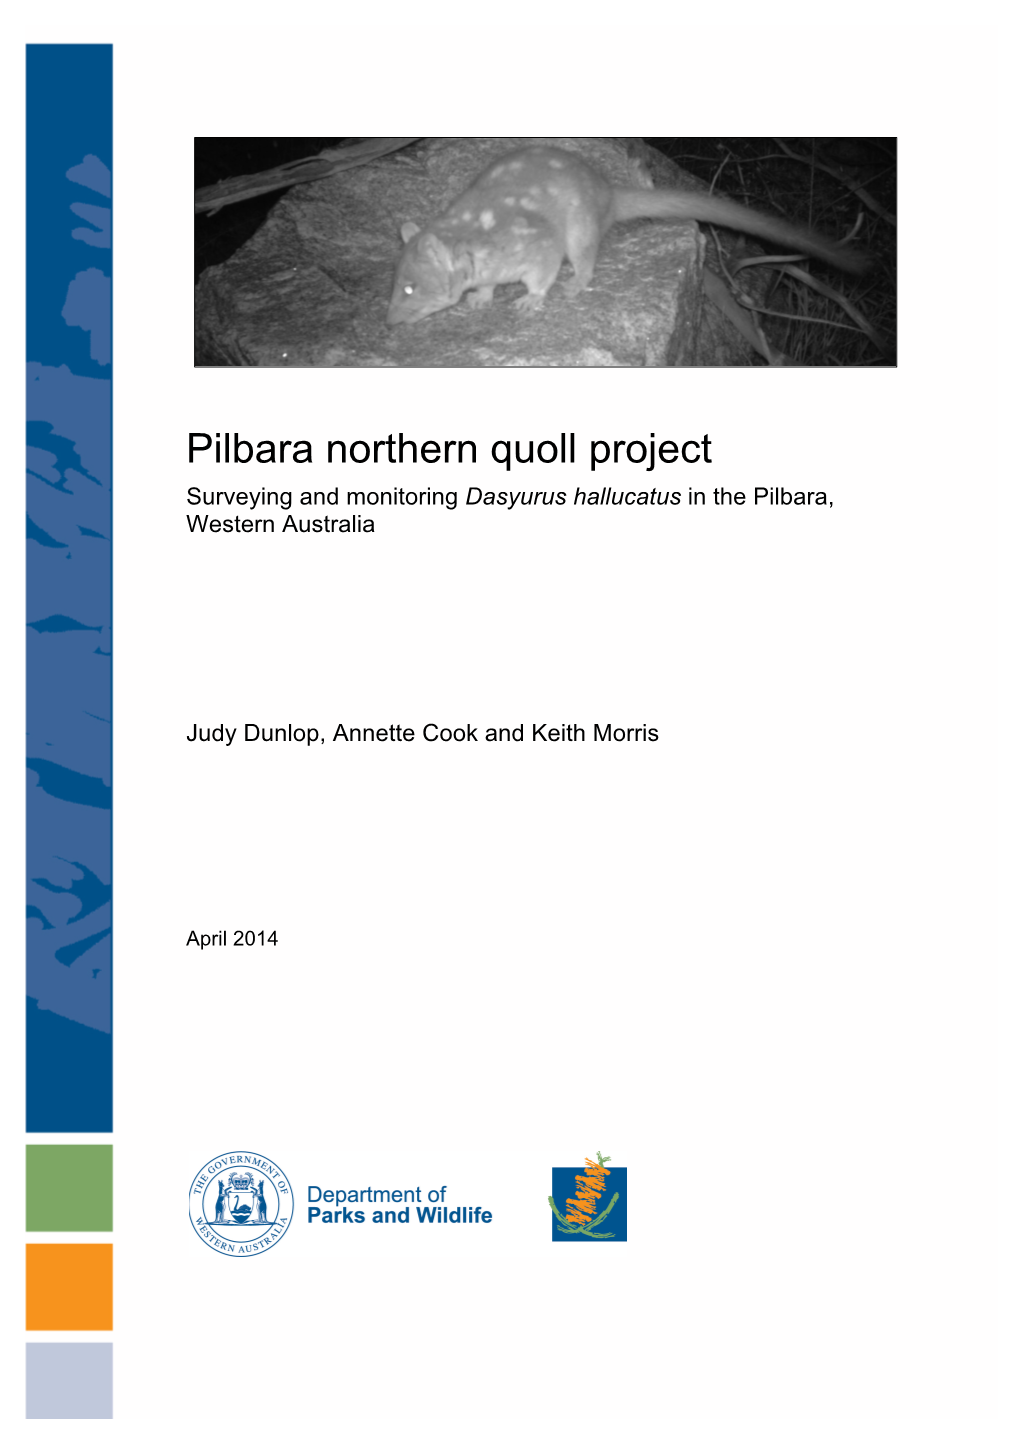 Pilbara Northern Quoll Project Surveying and Monitoring Dasyurus Hallucatus in the Pilbara, Western Australia